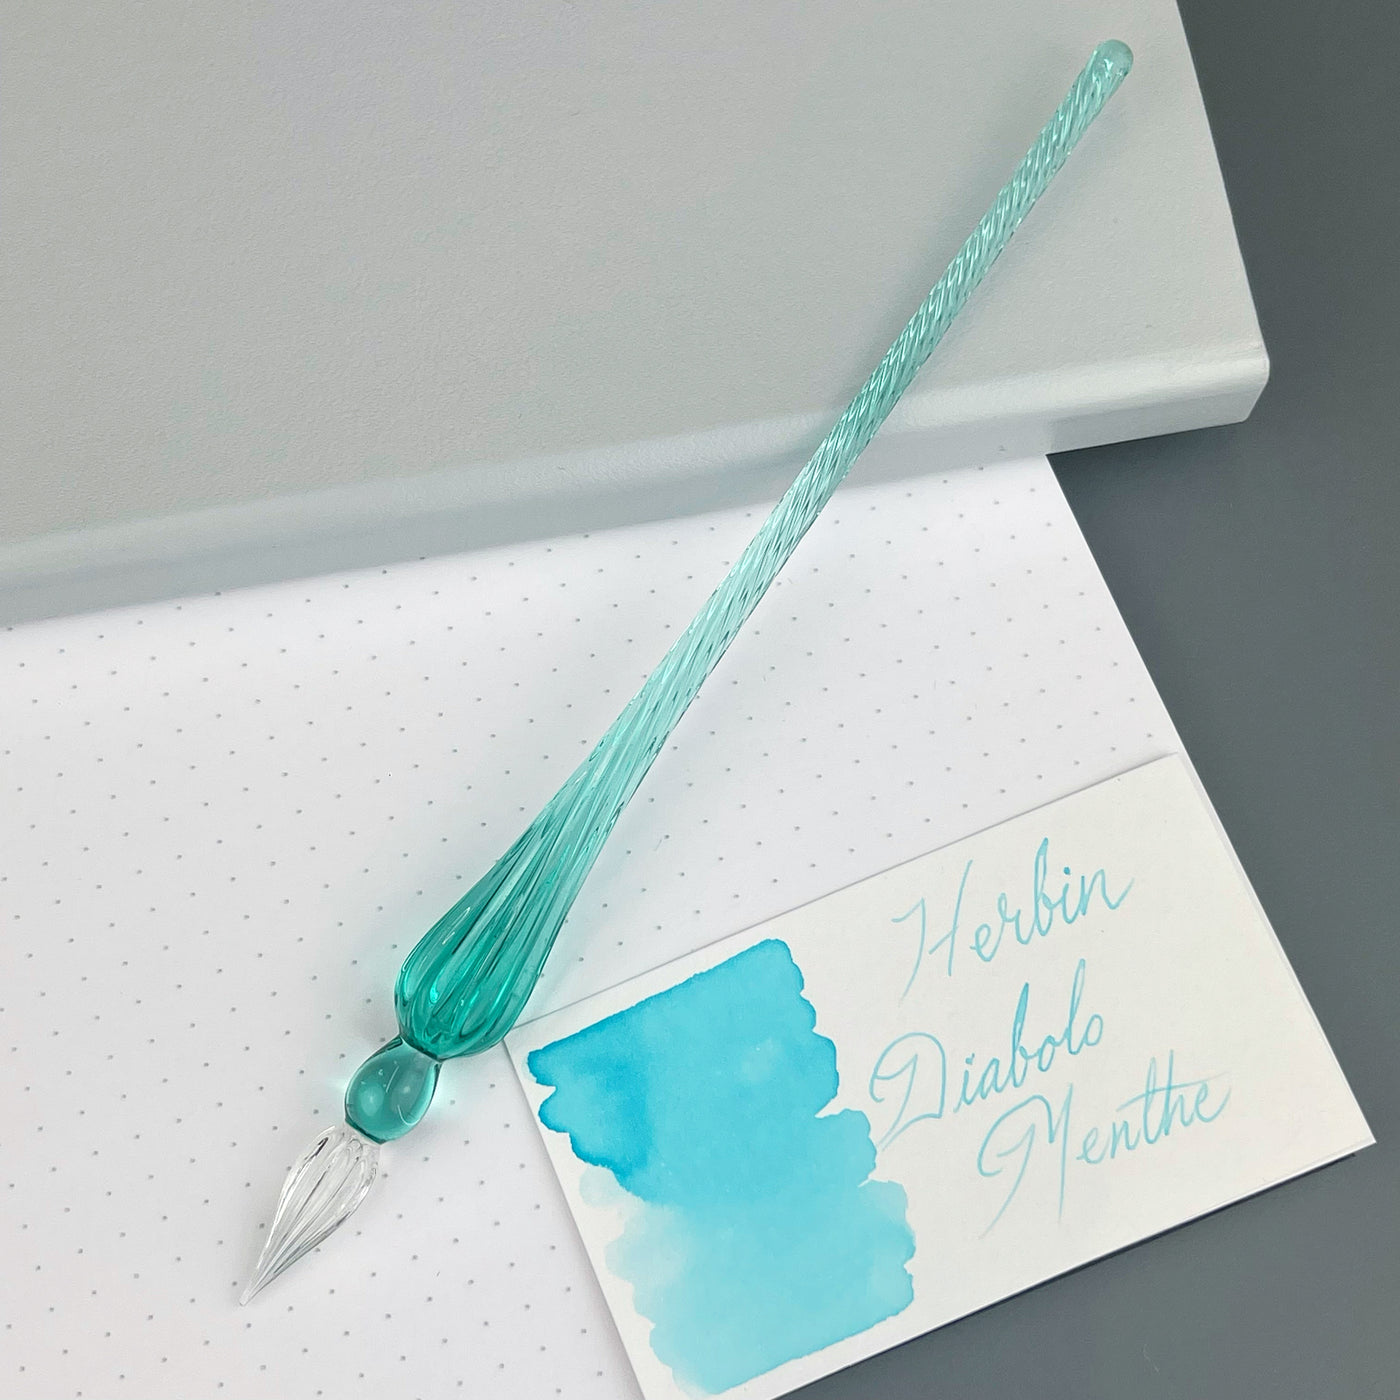 Herbin Round Glass Dip Pen - Turquoise